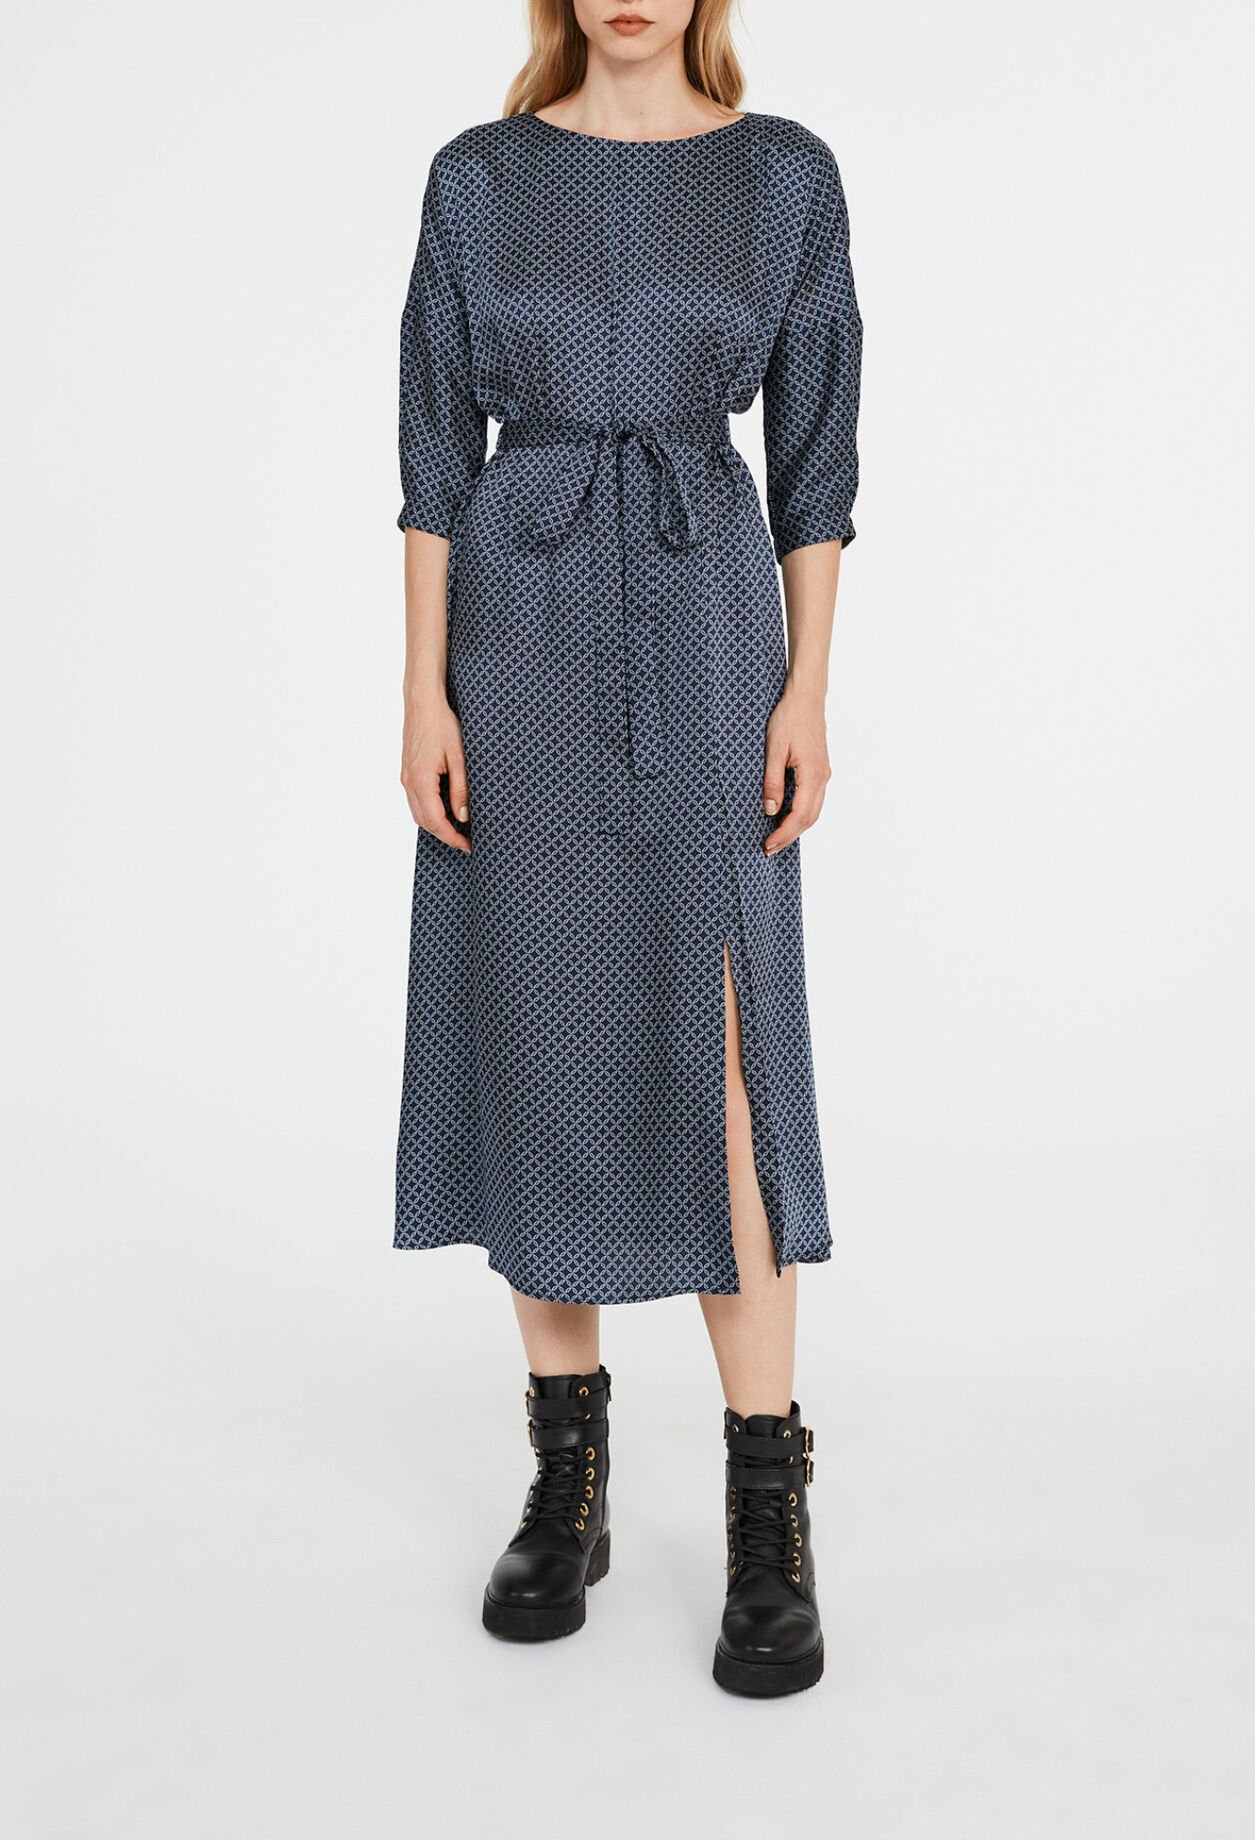 Long, patterned slit dress